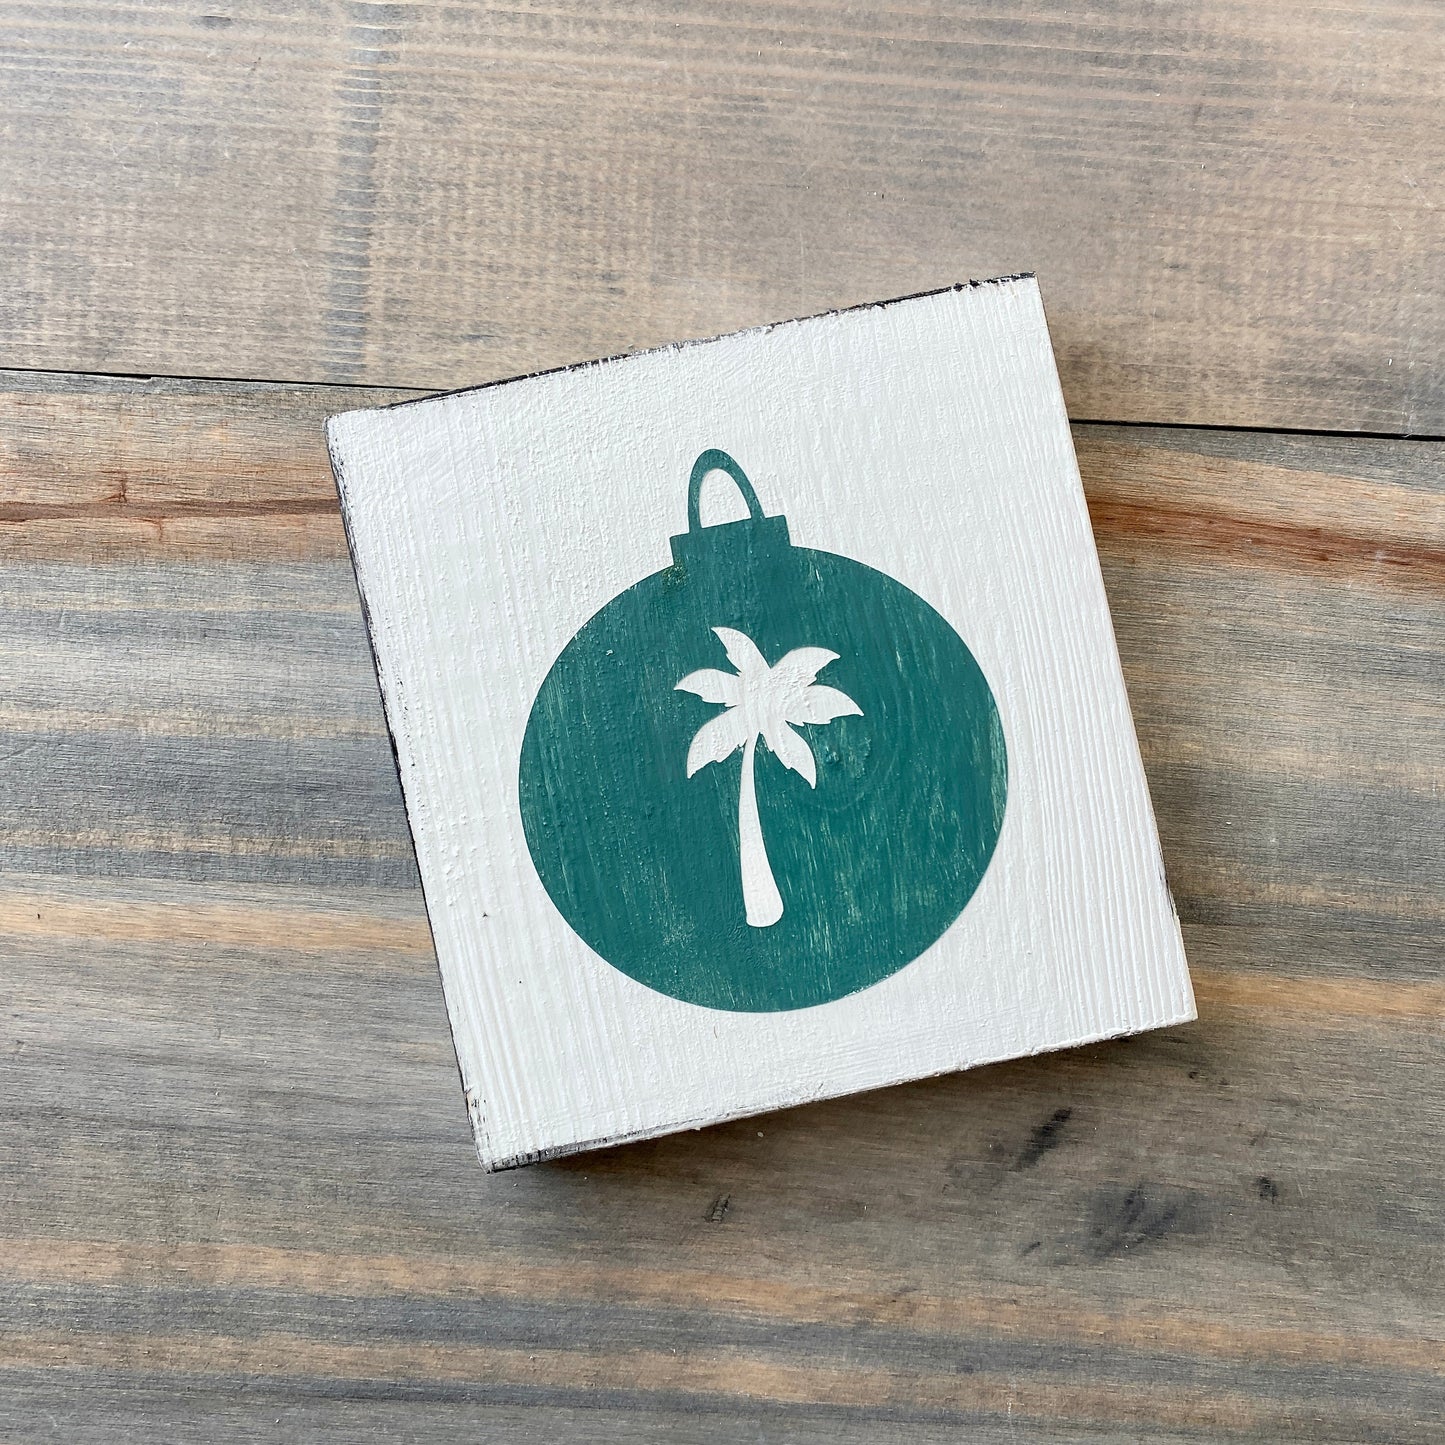 Coastal Christmas Decor, Anchored Soul Designs Palm Tree Ornament wood sign white background with dark green design, beach house holiday decor coastal design